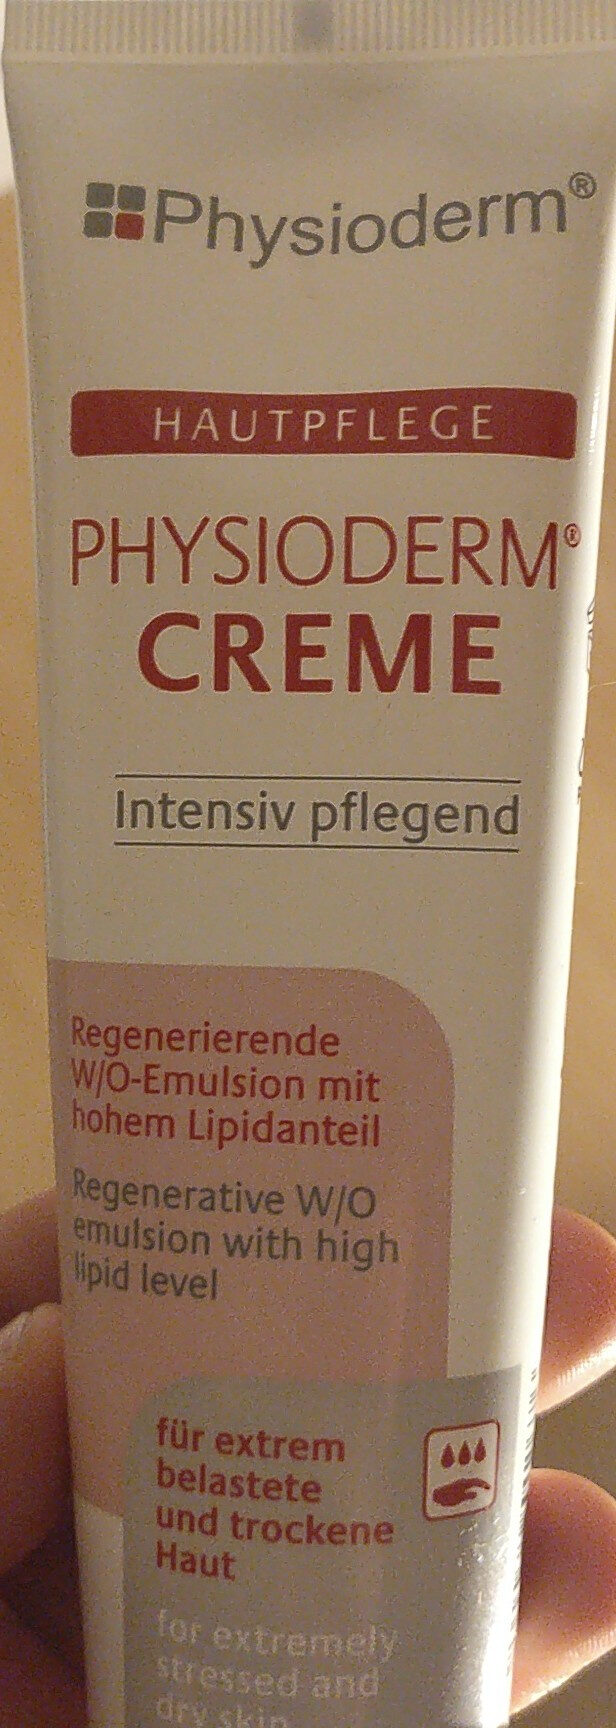 Physioderm Creme - intensiv pflegend - Product - en